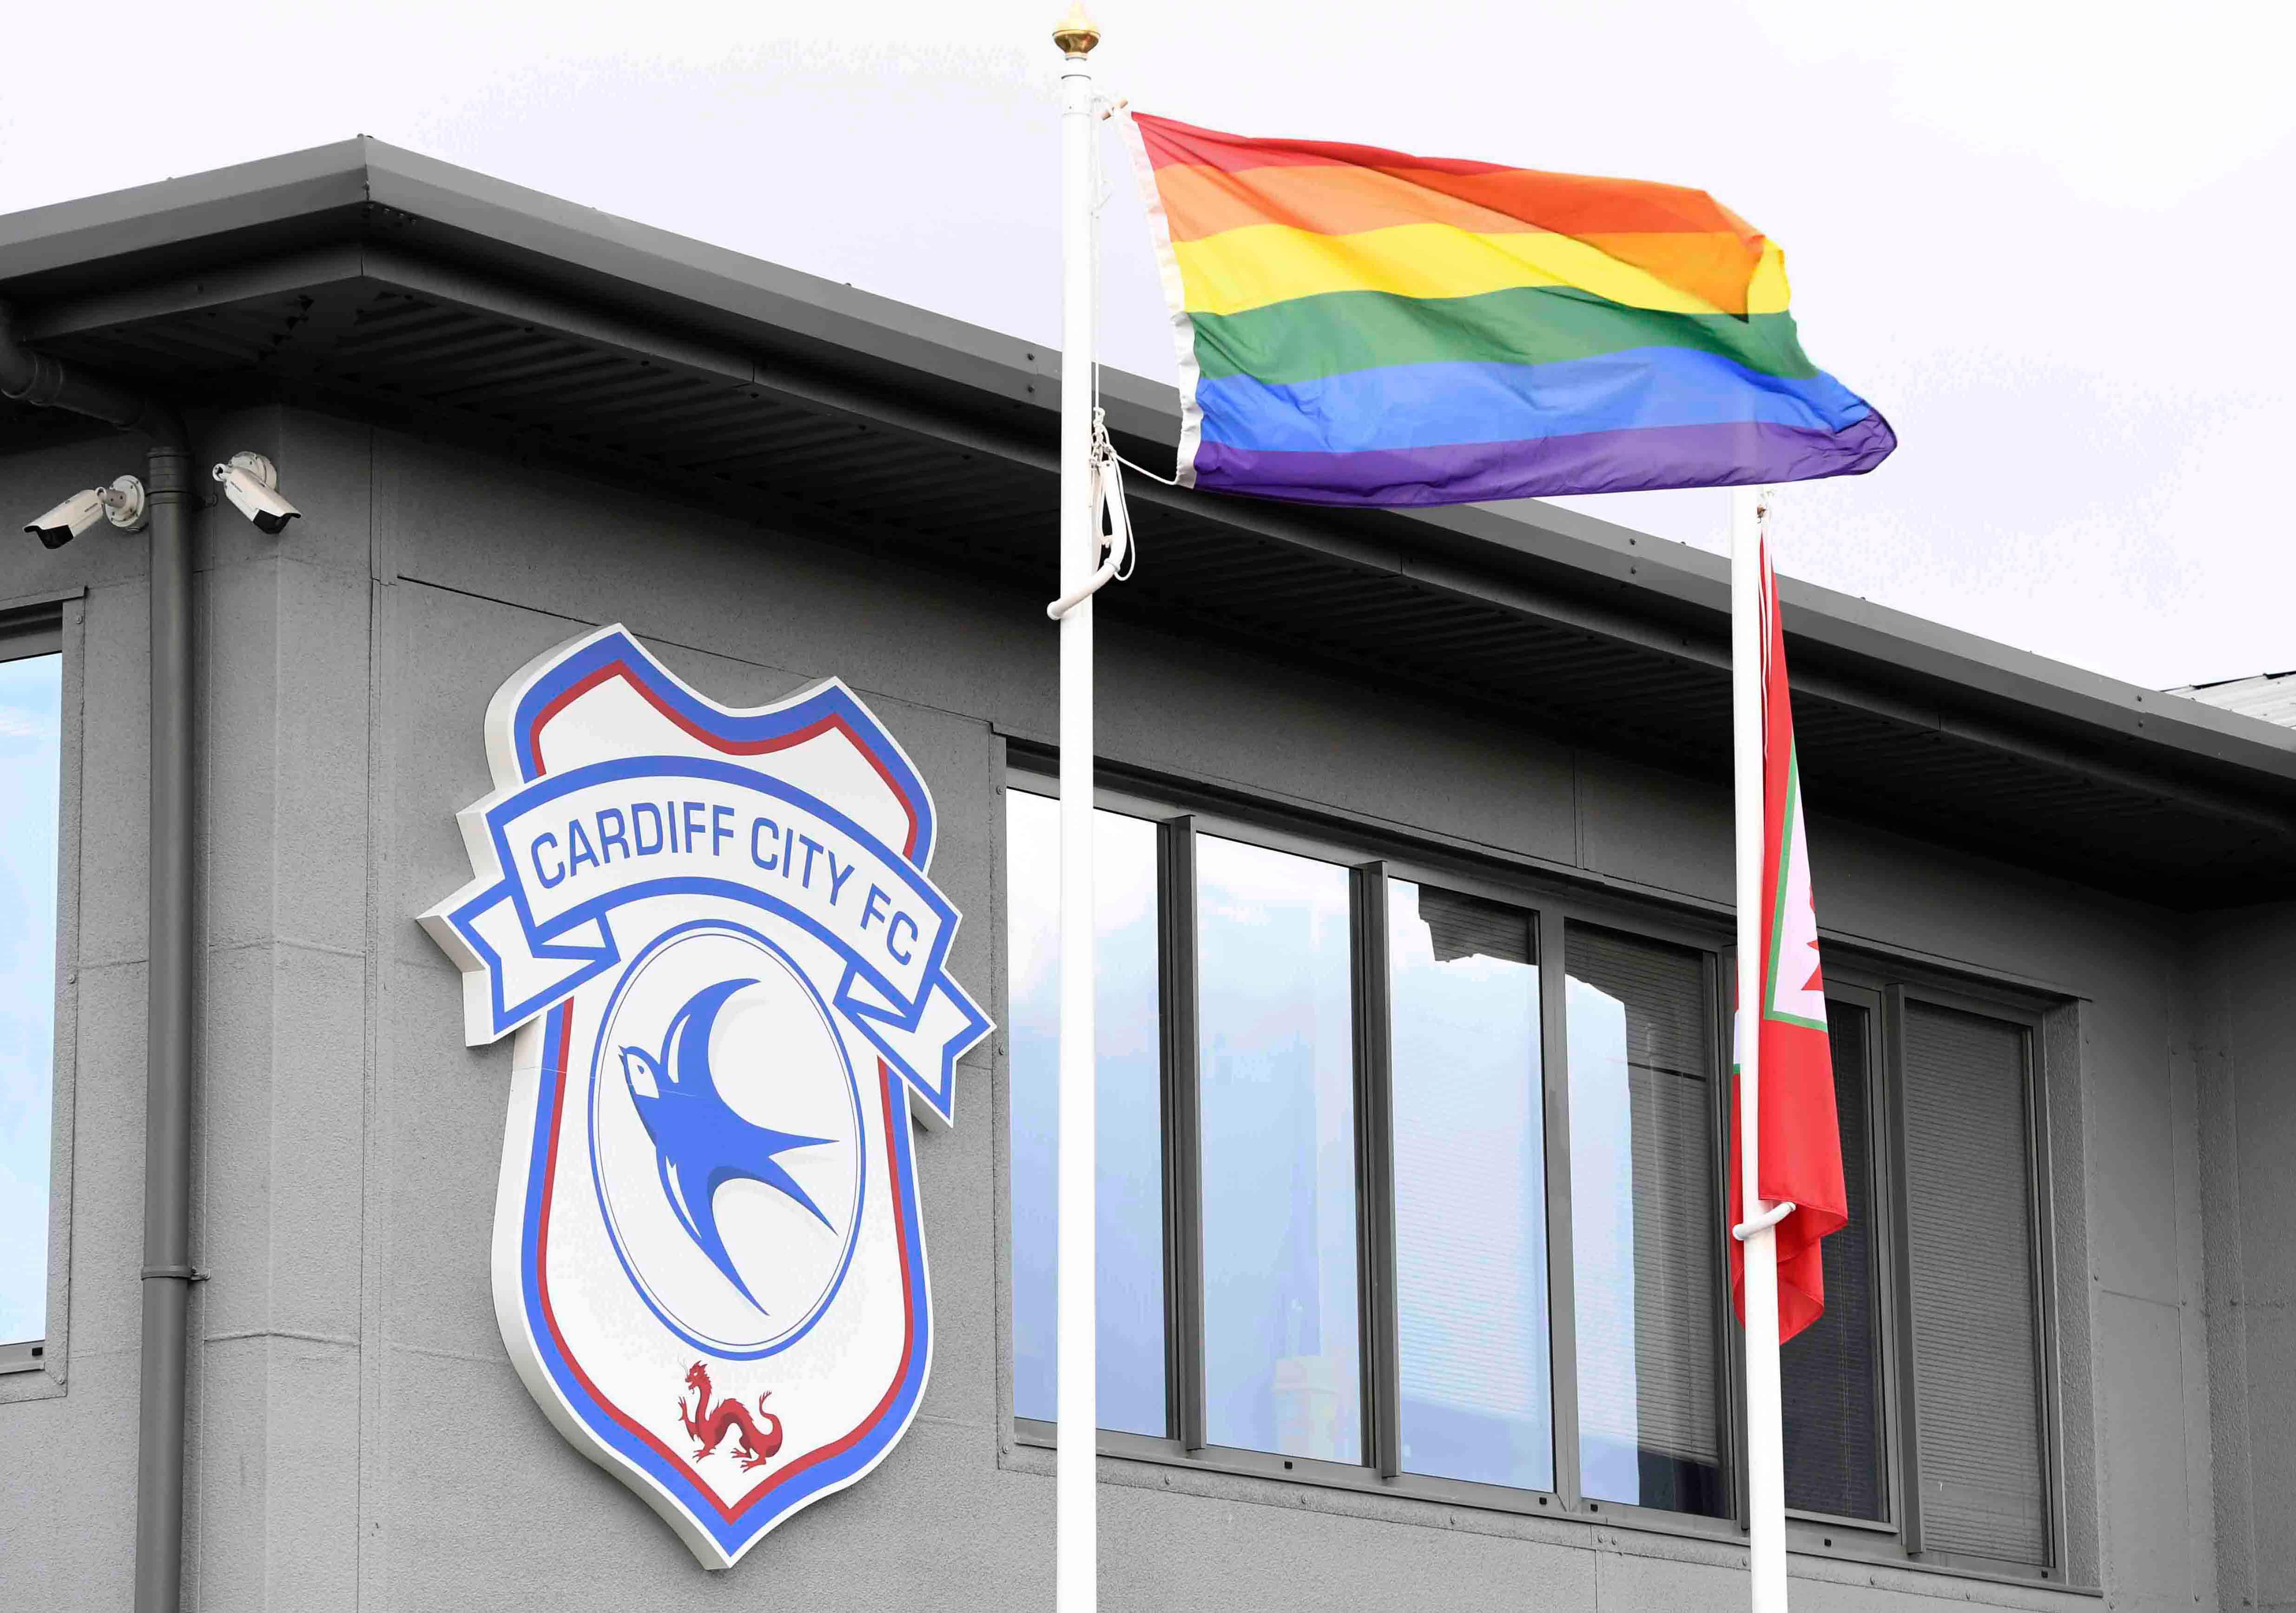 Rainbow Flag at City's training ground...